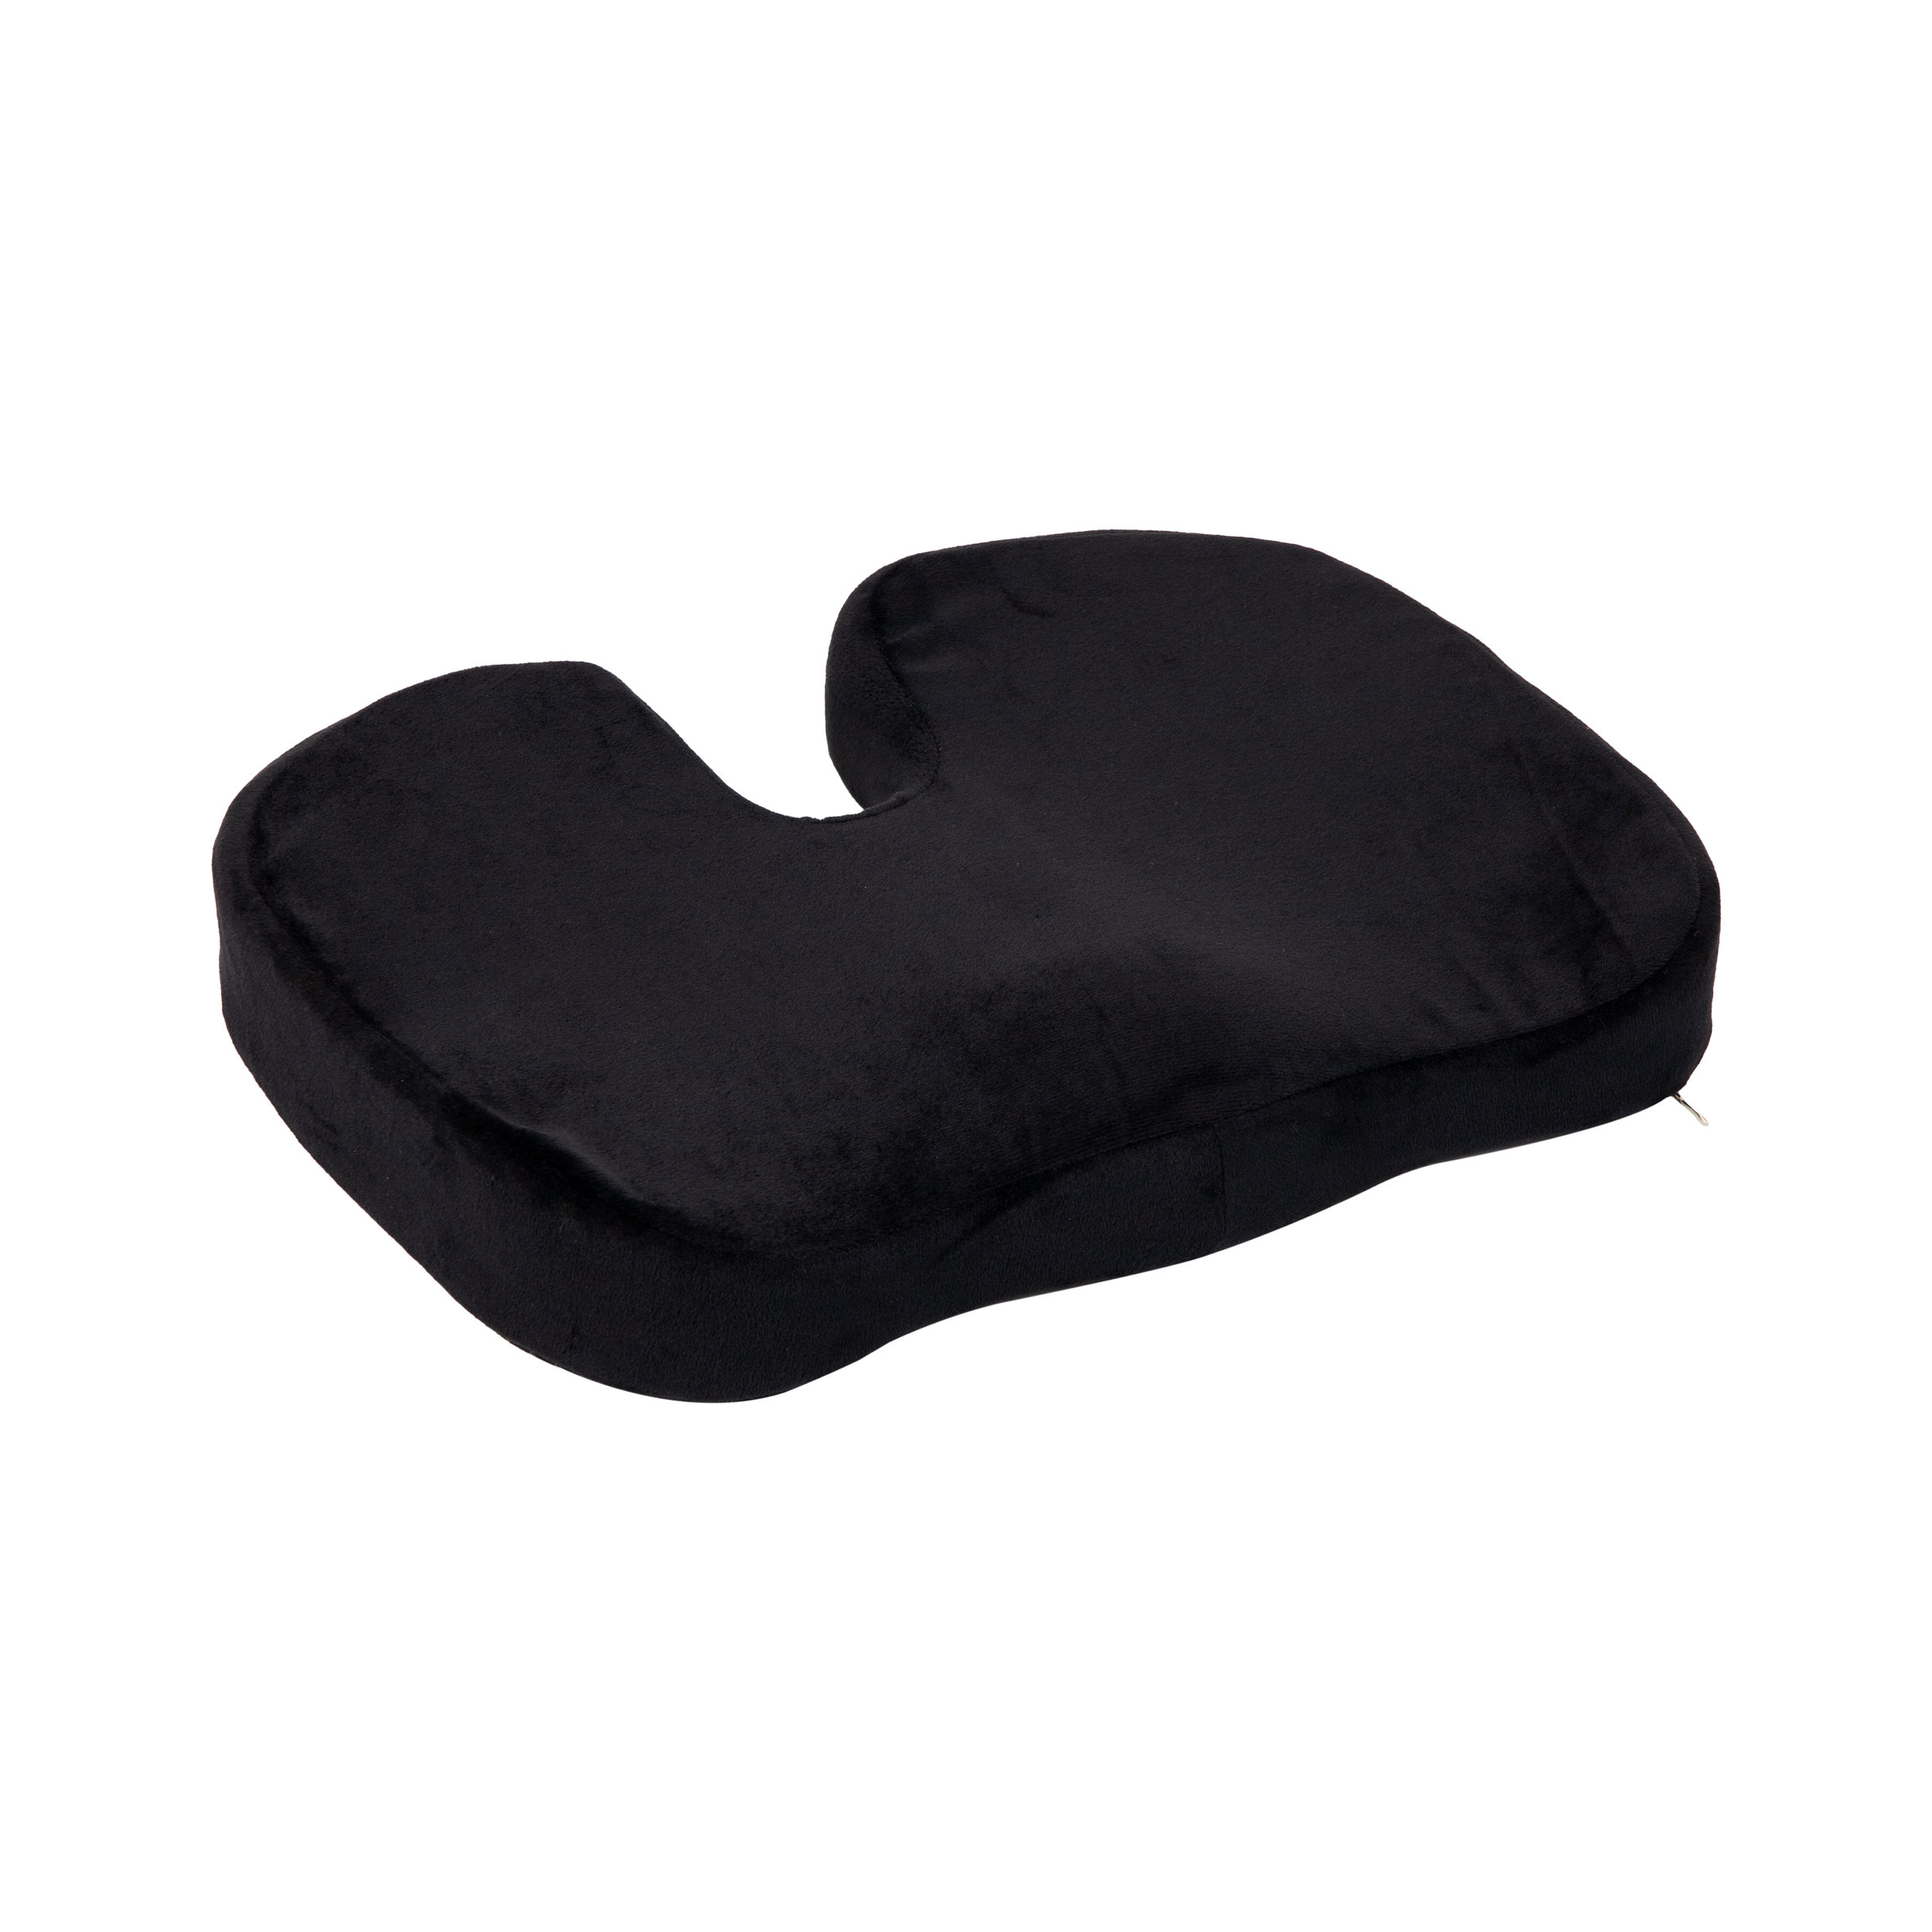 Sleepavo Memory Foam Seat Cushion & Lower Back Pain Relief Padded Lumbar  Support & Reviews